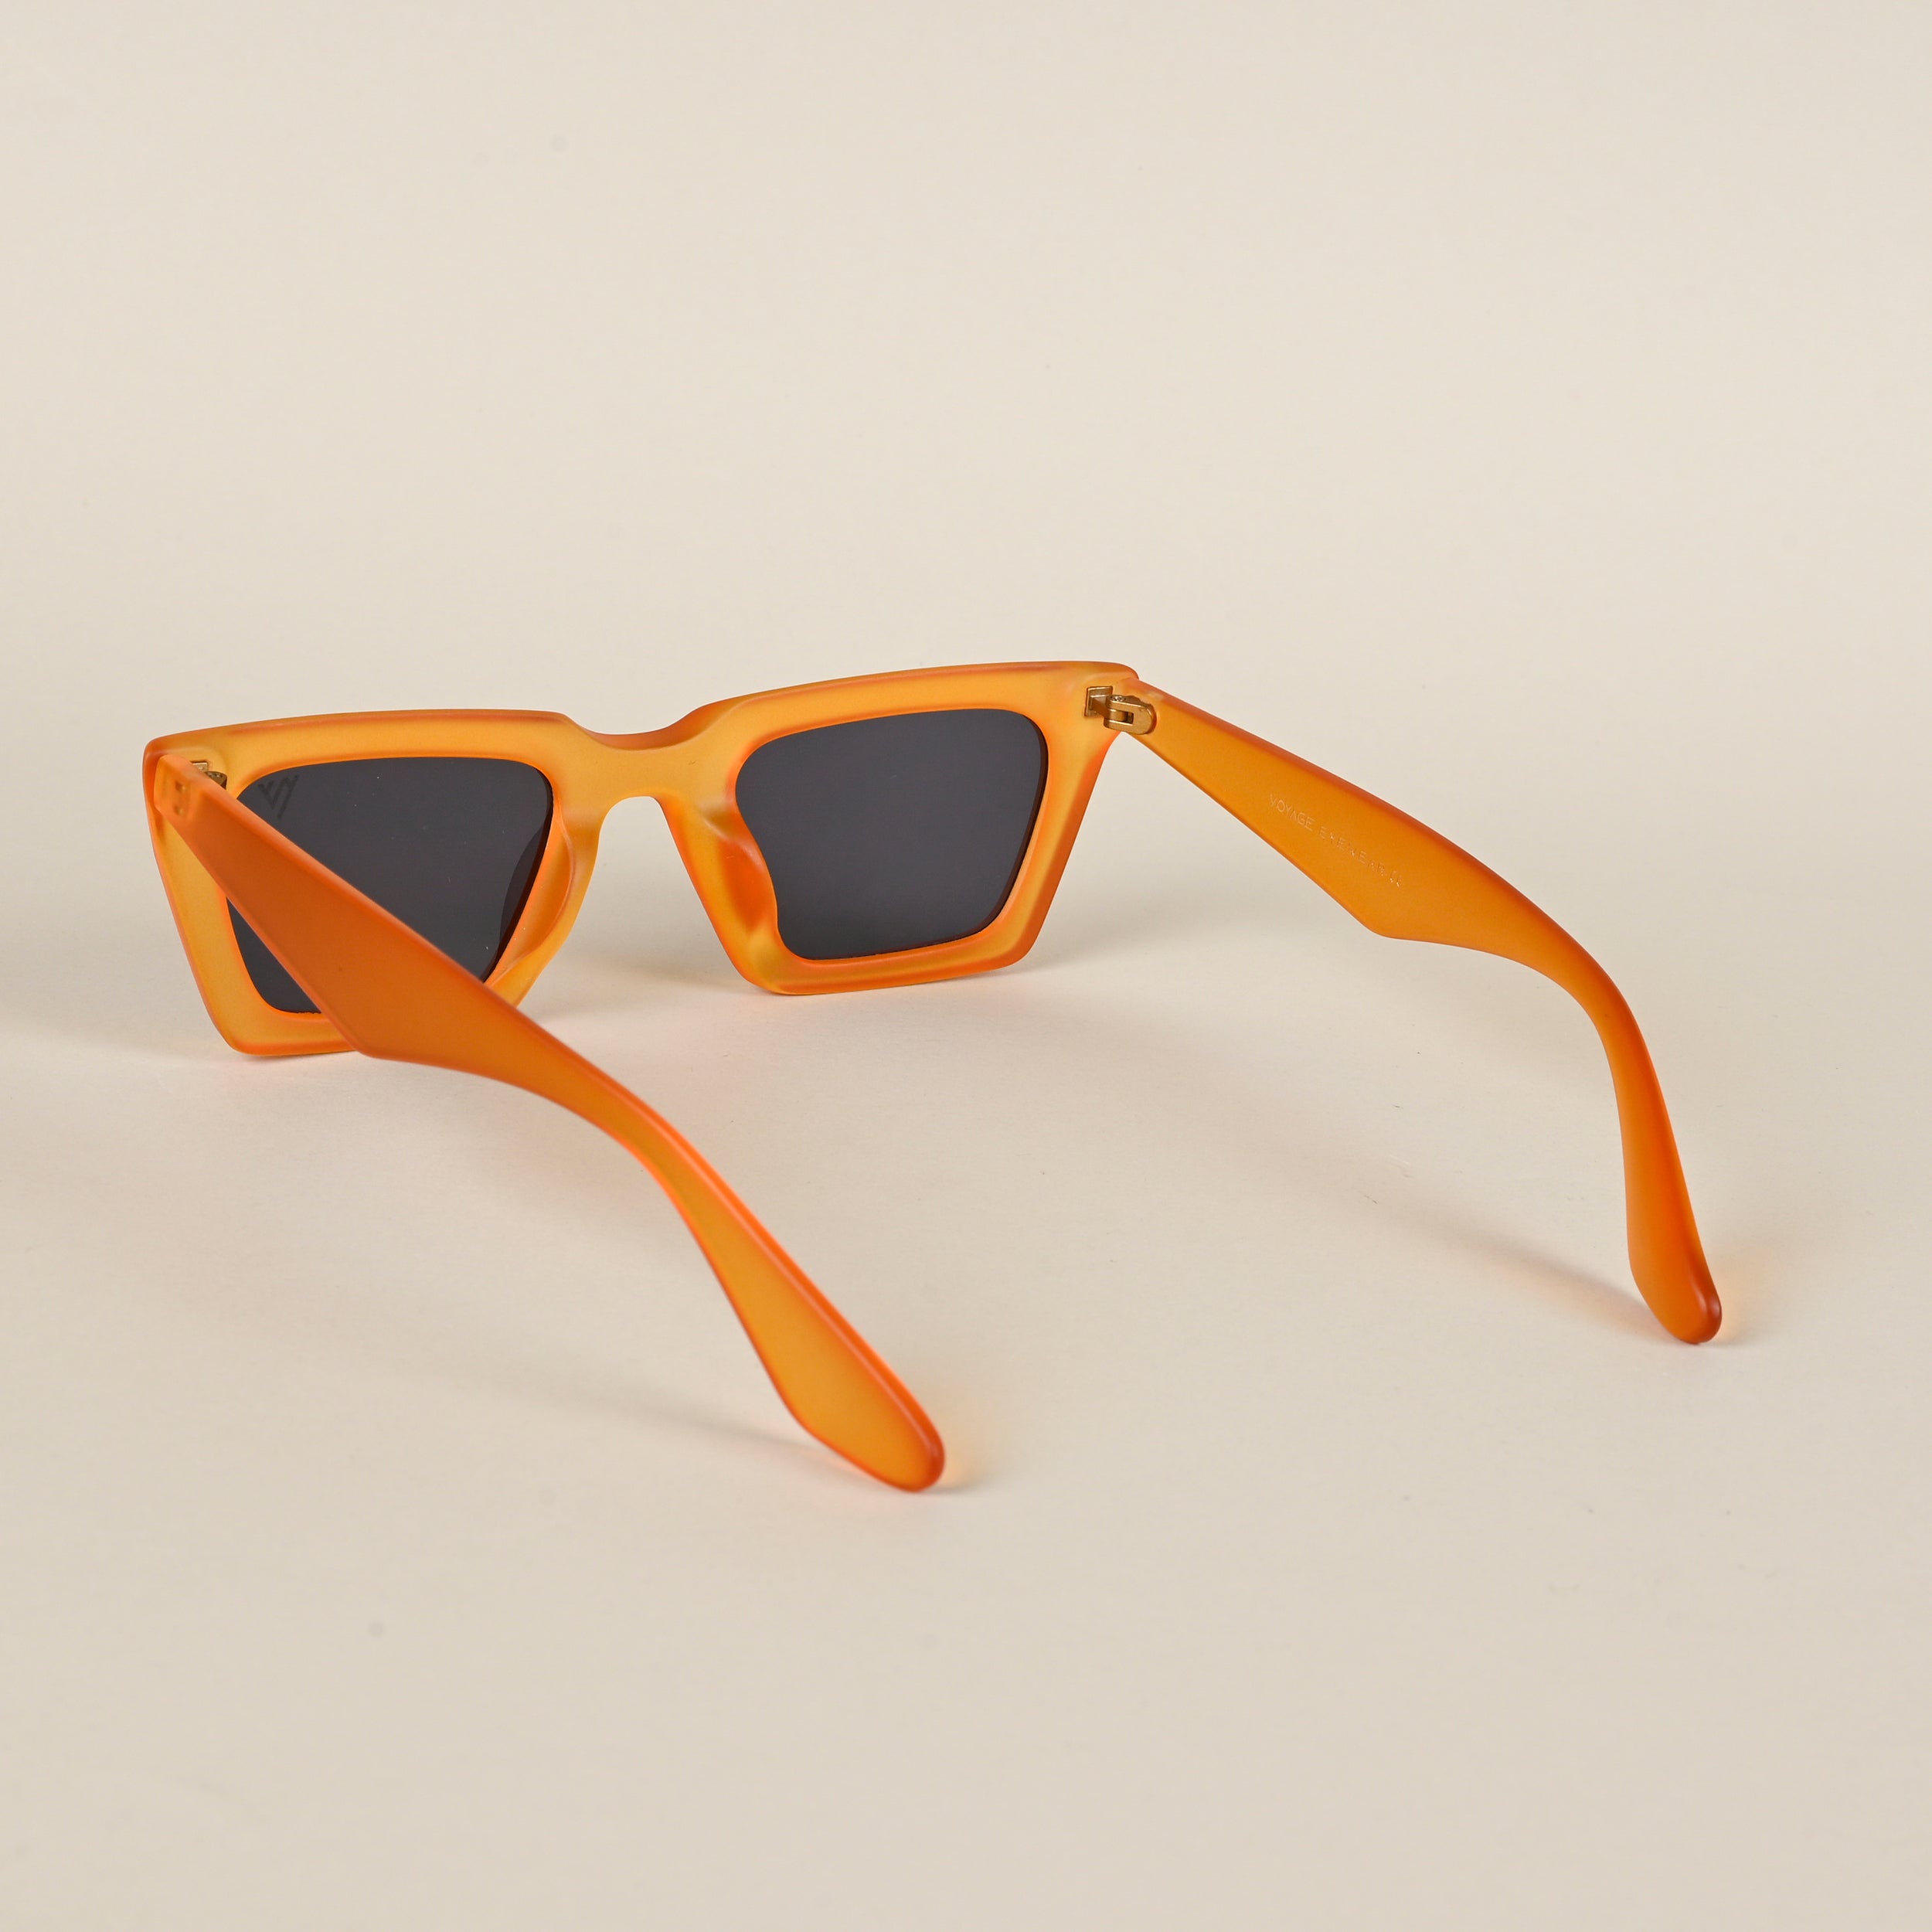 Voyage Black Wayfarer Sunglasses for Men & Women (86632MG4125)